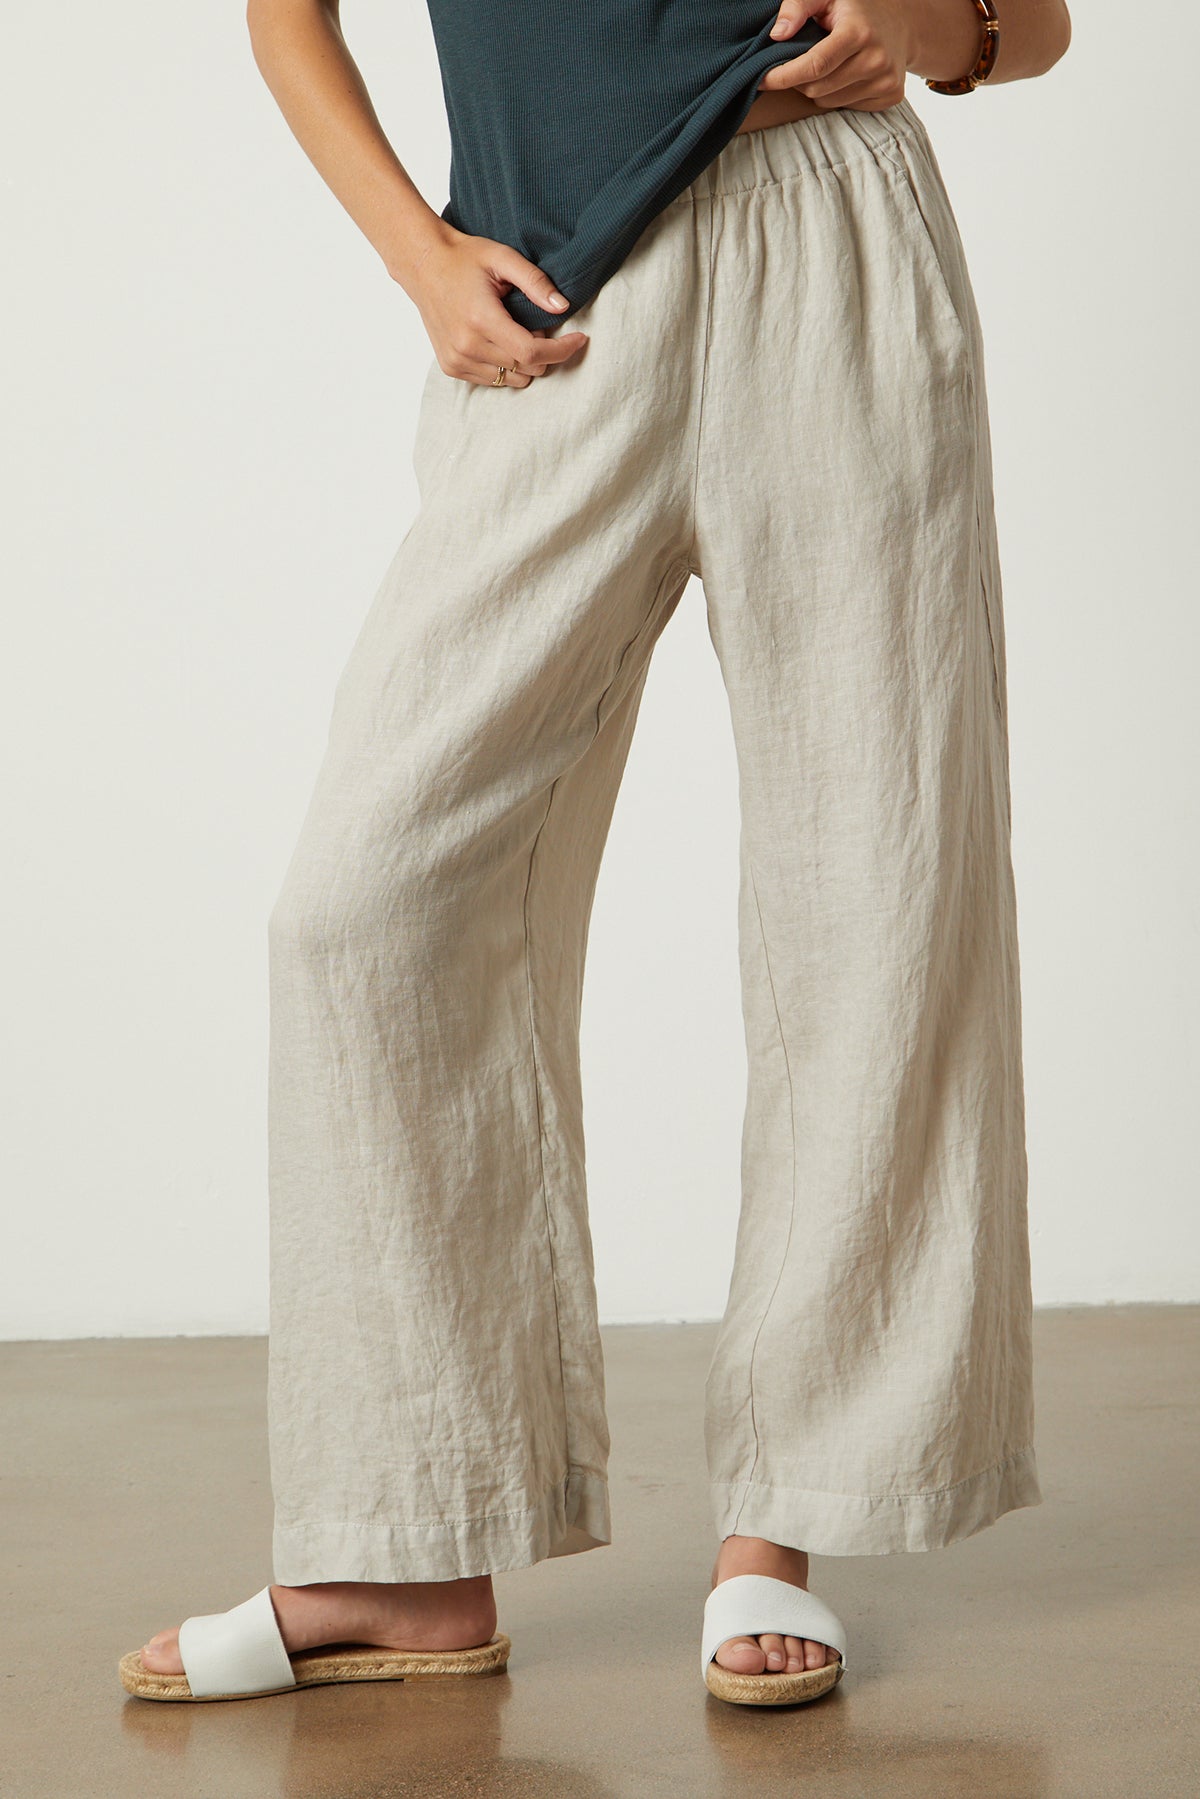 Lola linen pant in cobble front-26022702383297